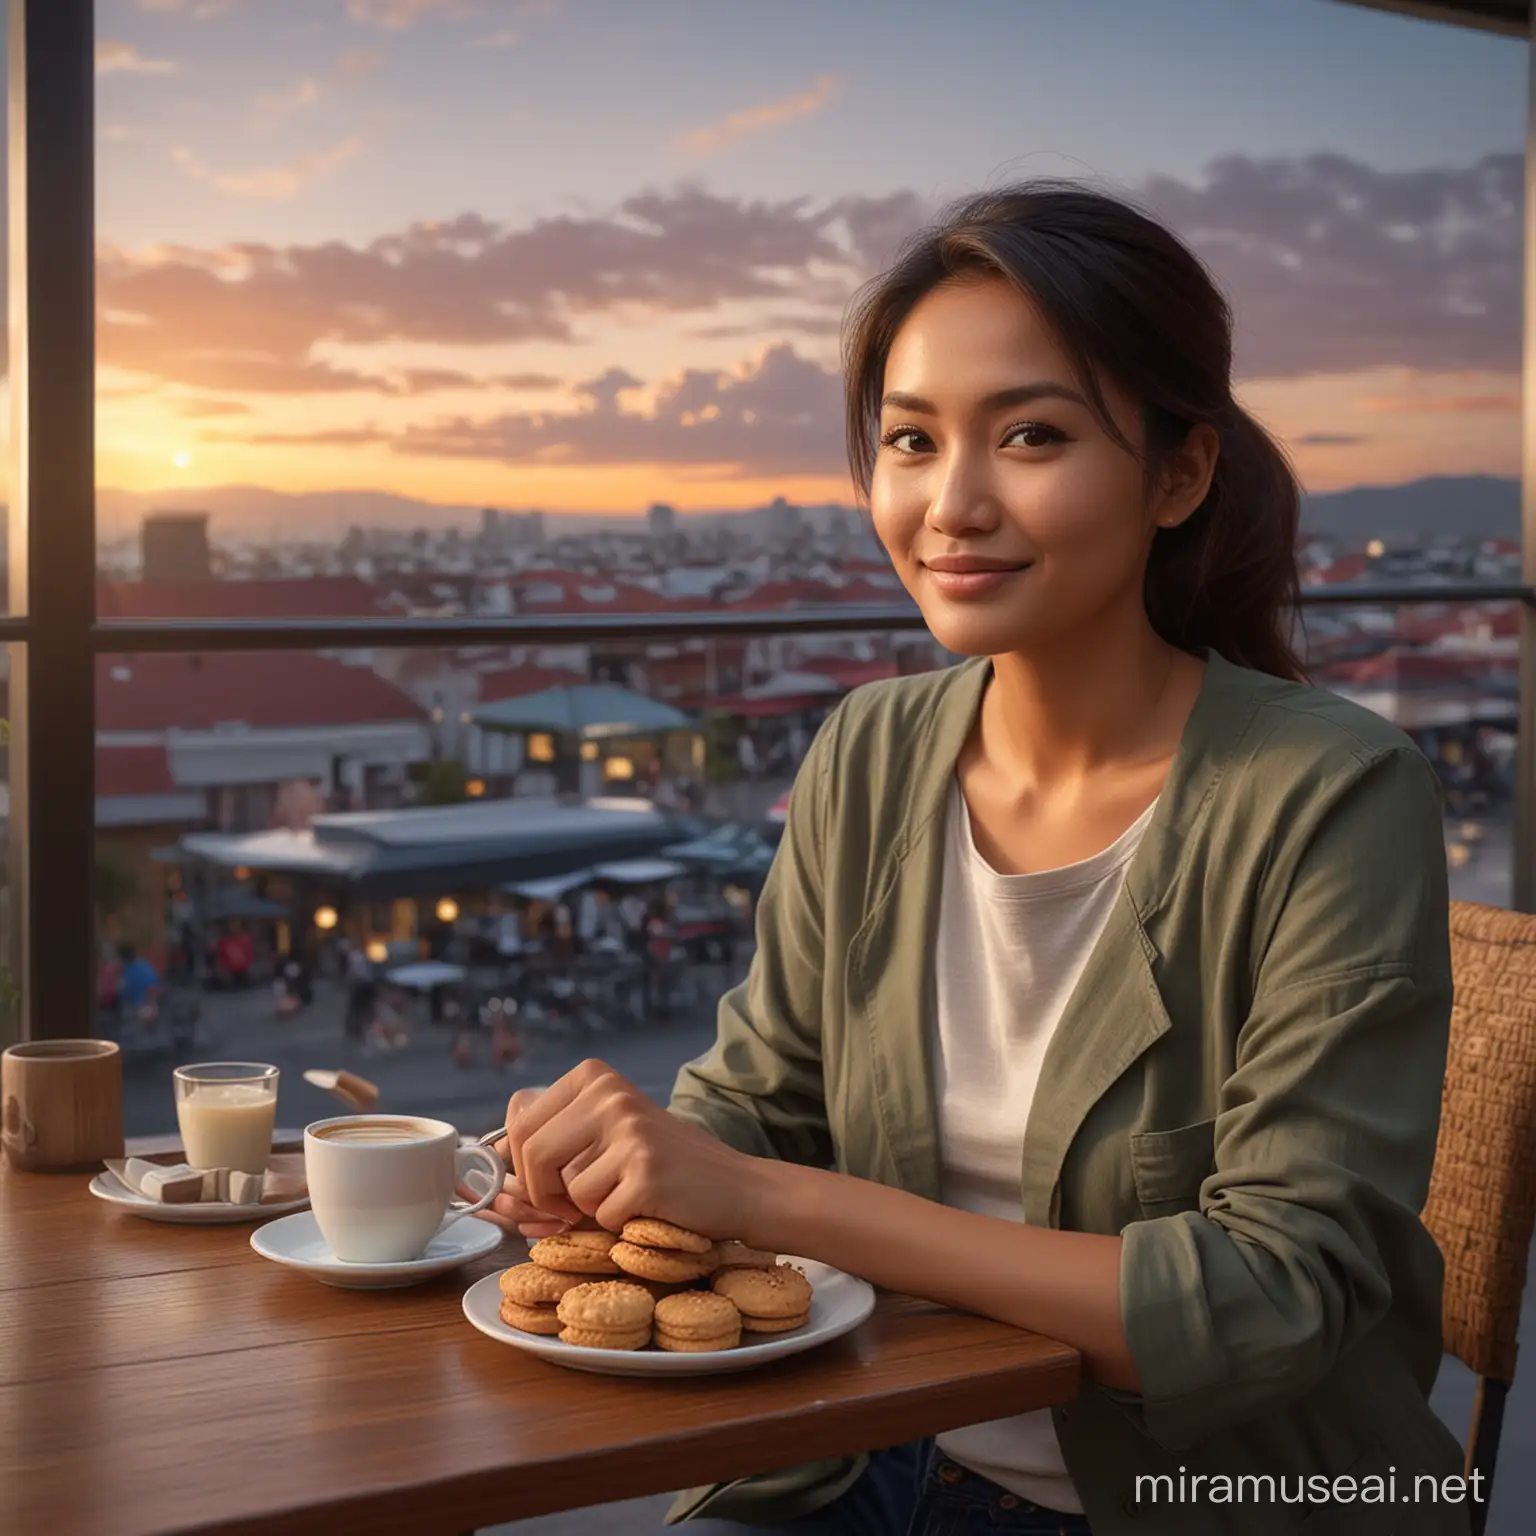 Stylish Indonesian Woman Enjoying Sunset Coffee Break in Cafe